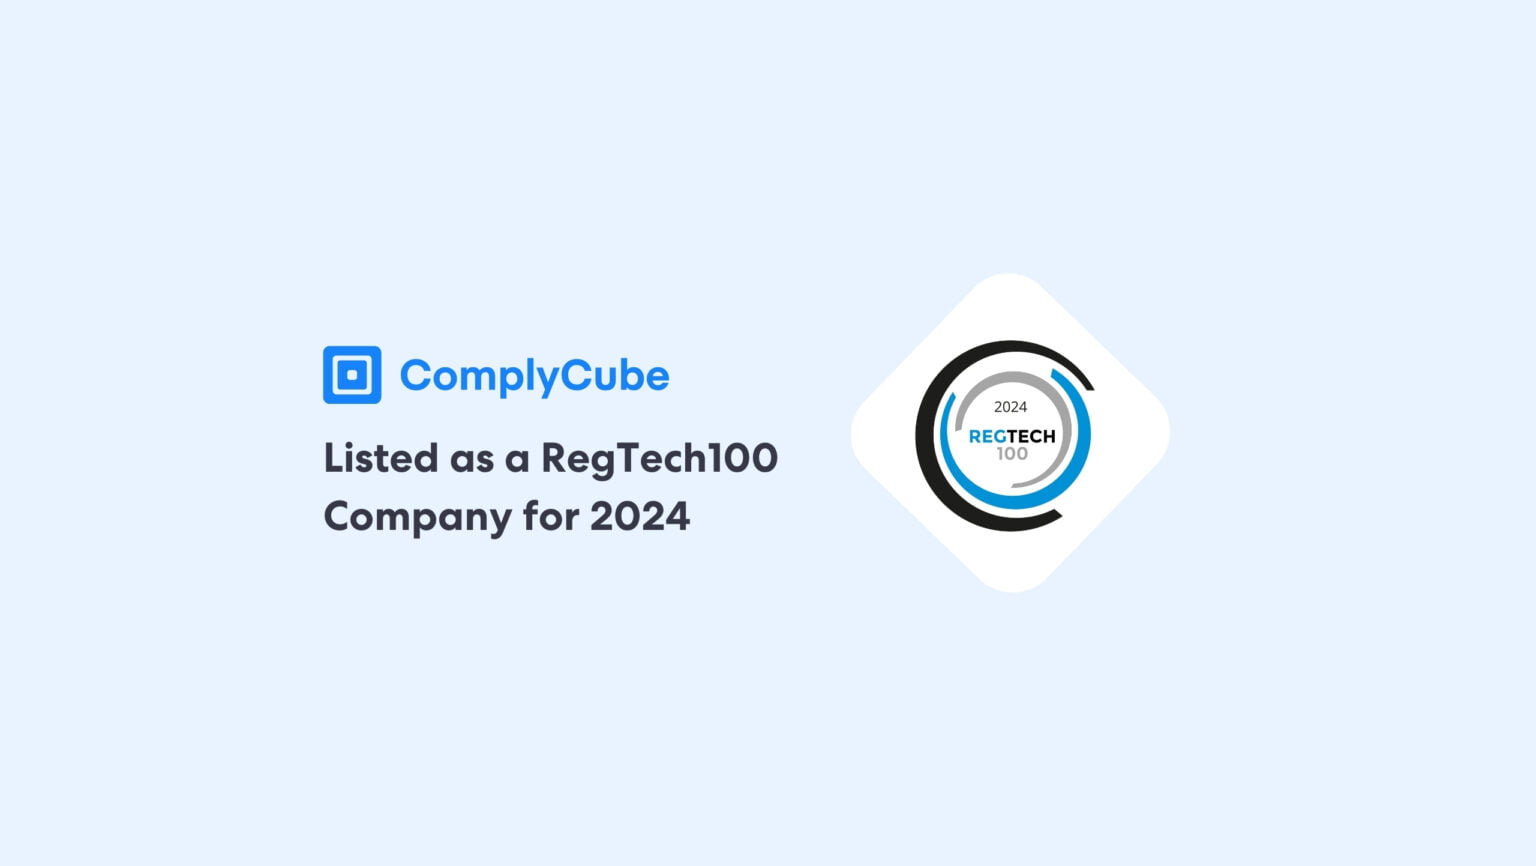 Lista ComplyCube RegTech100 2024